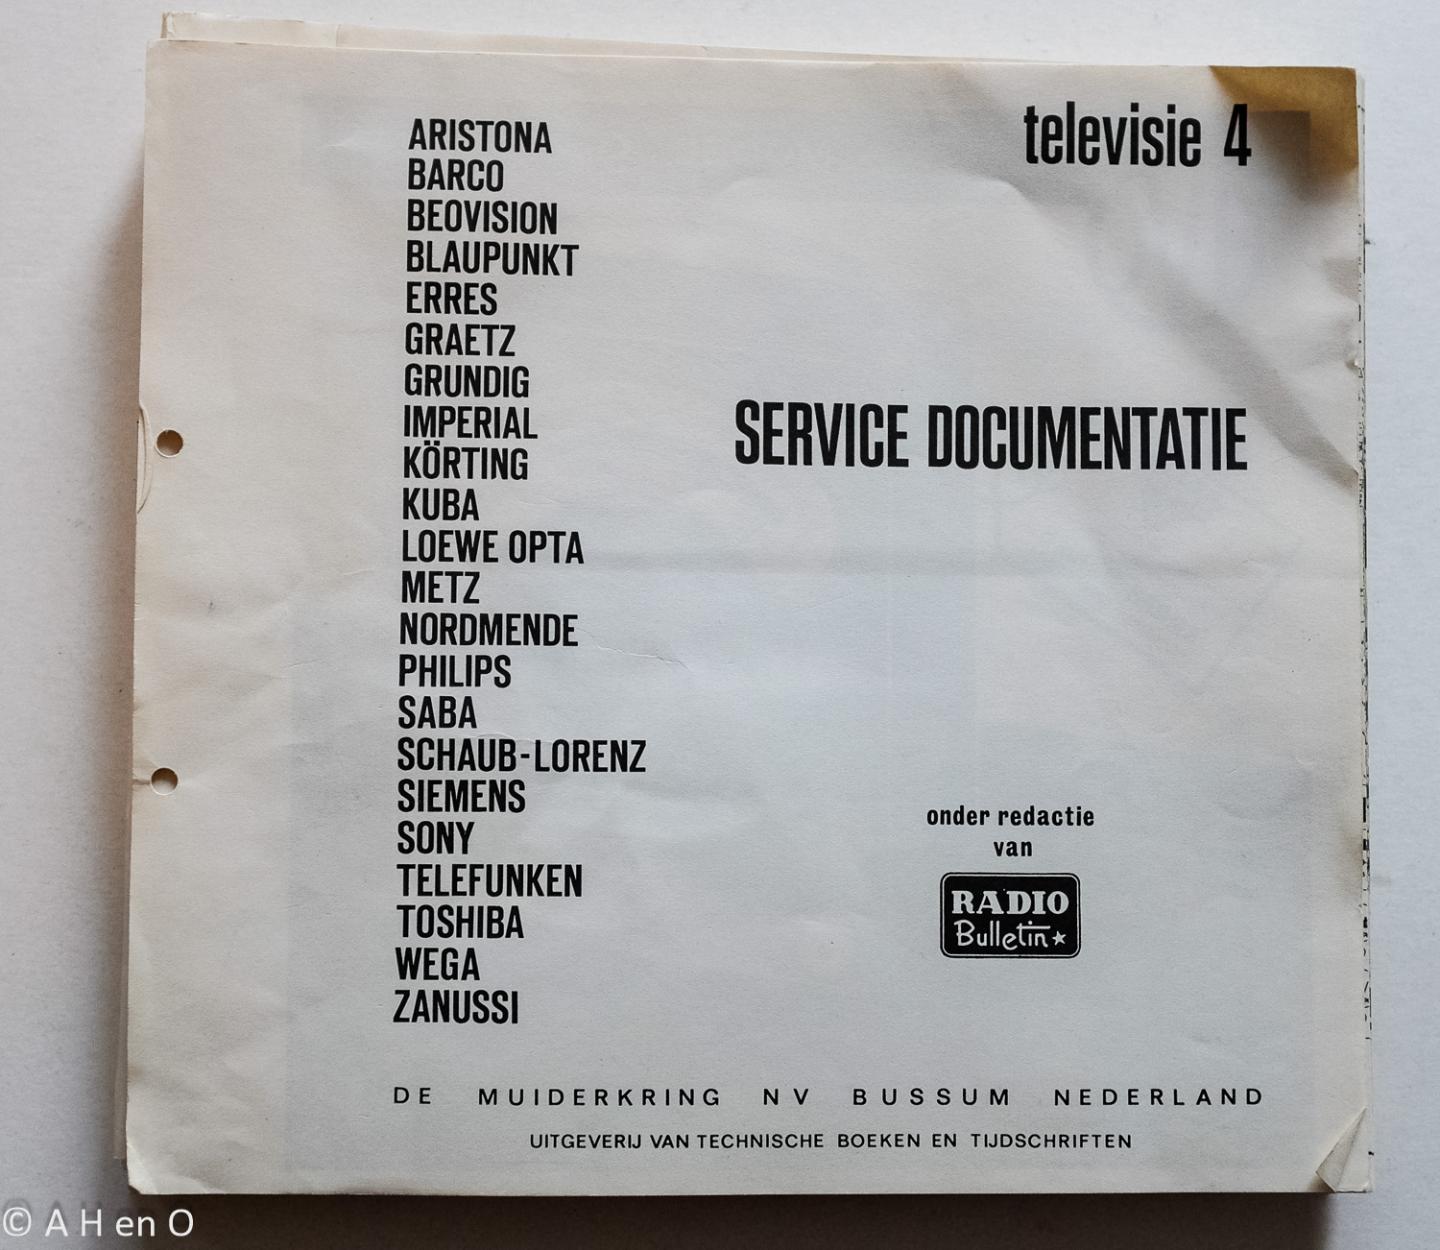  - Service documentatie - Televisie 4 - onder redactie van Radio Bulletin